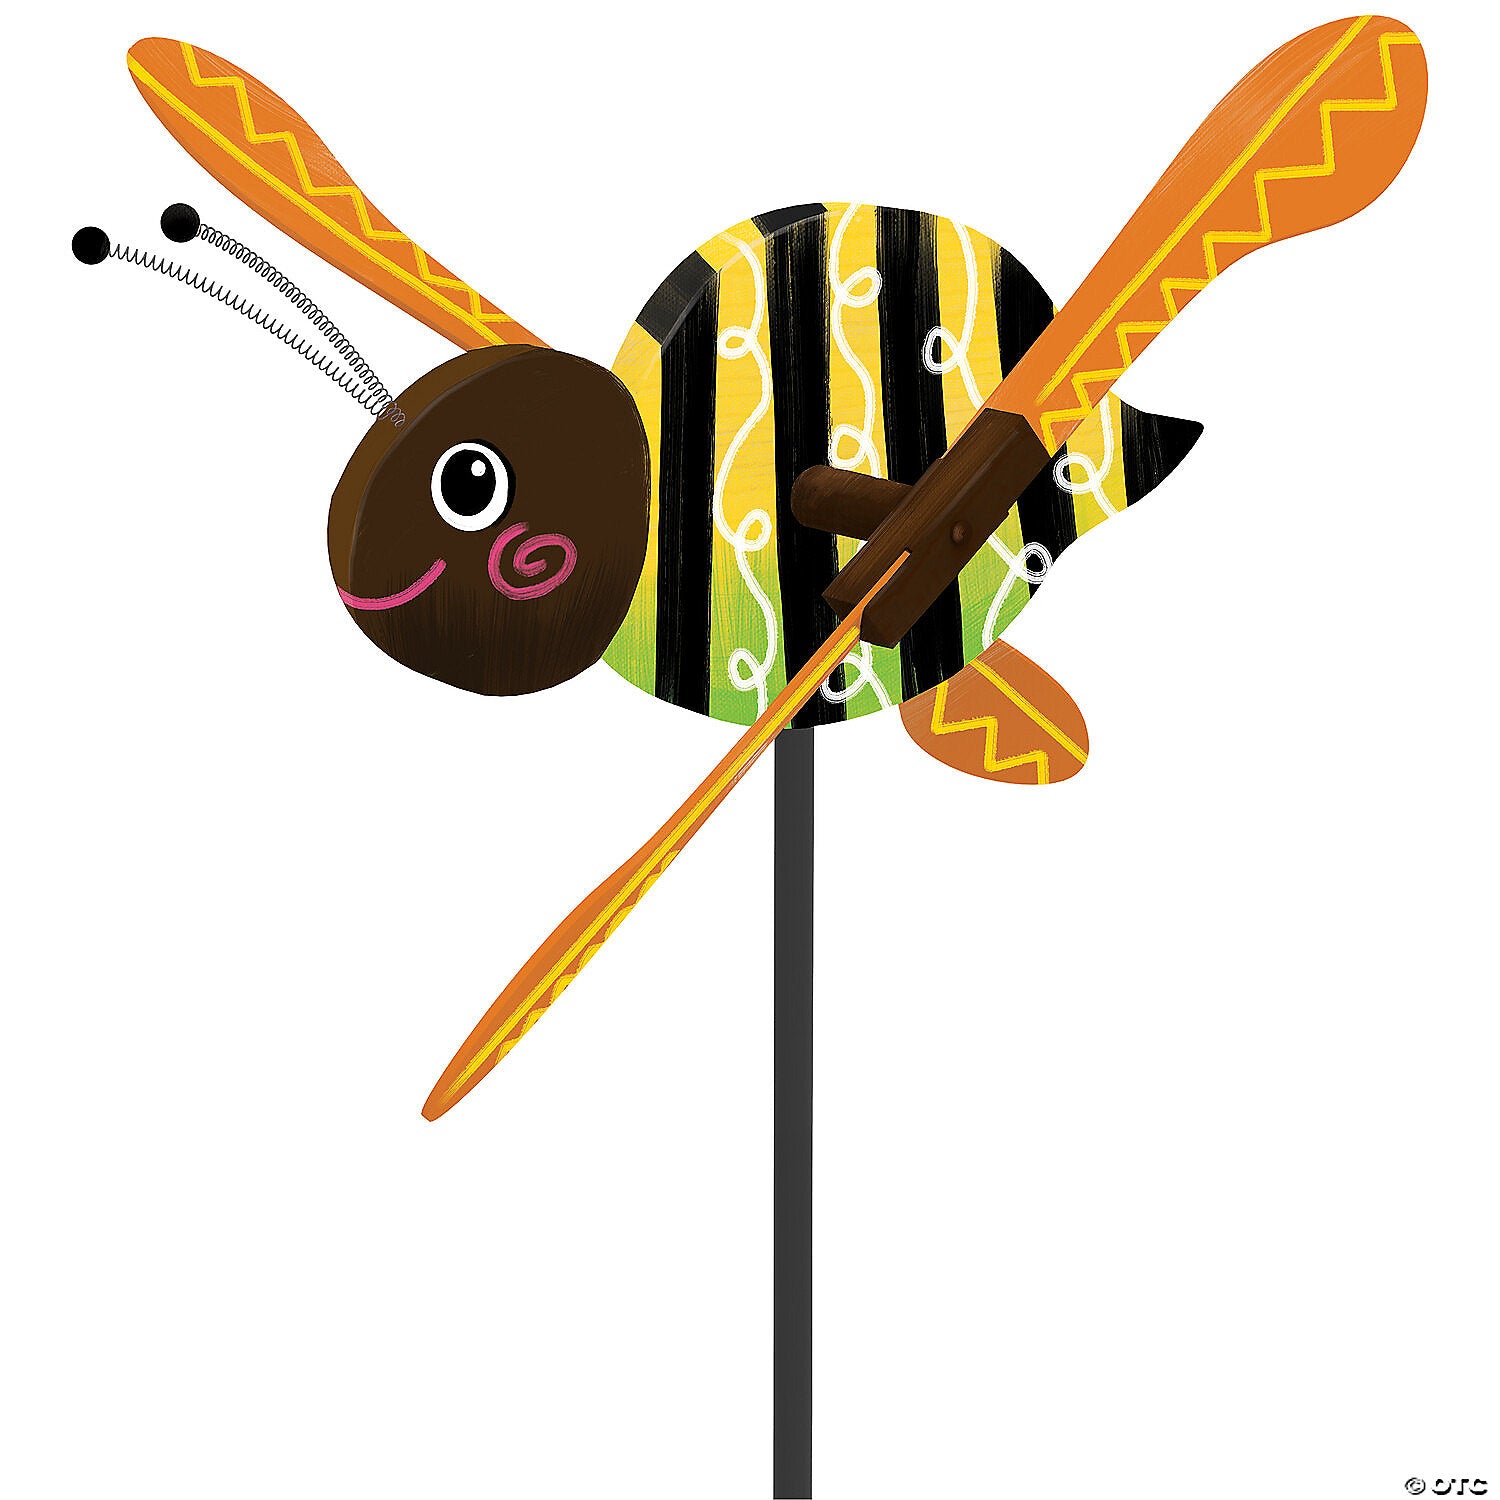 MYO Wind Spinner Bee